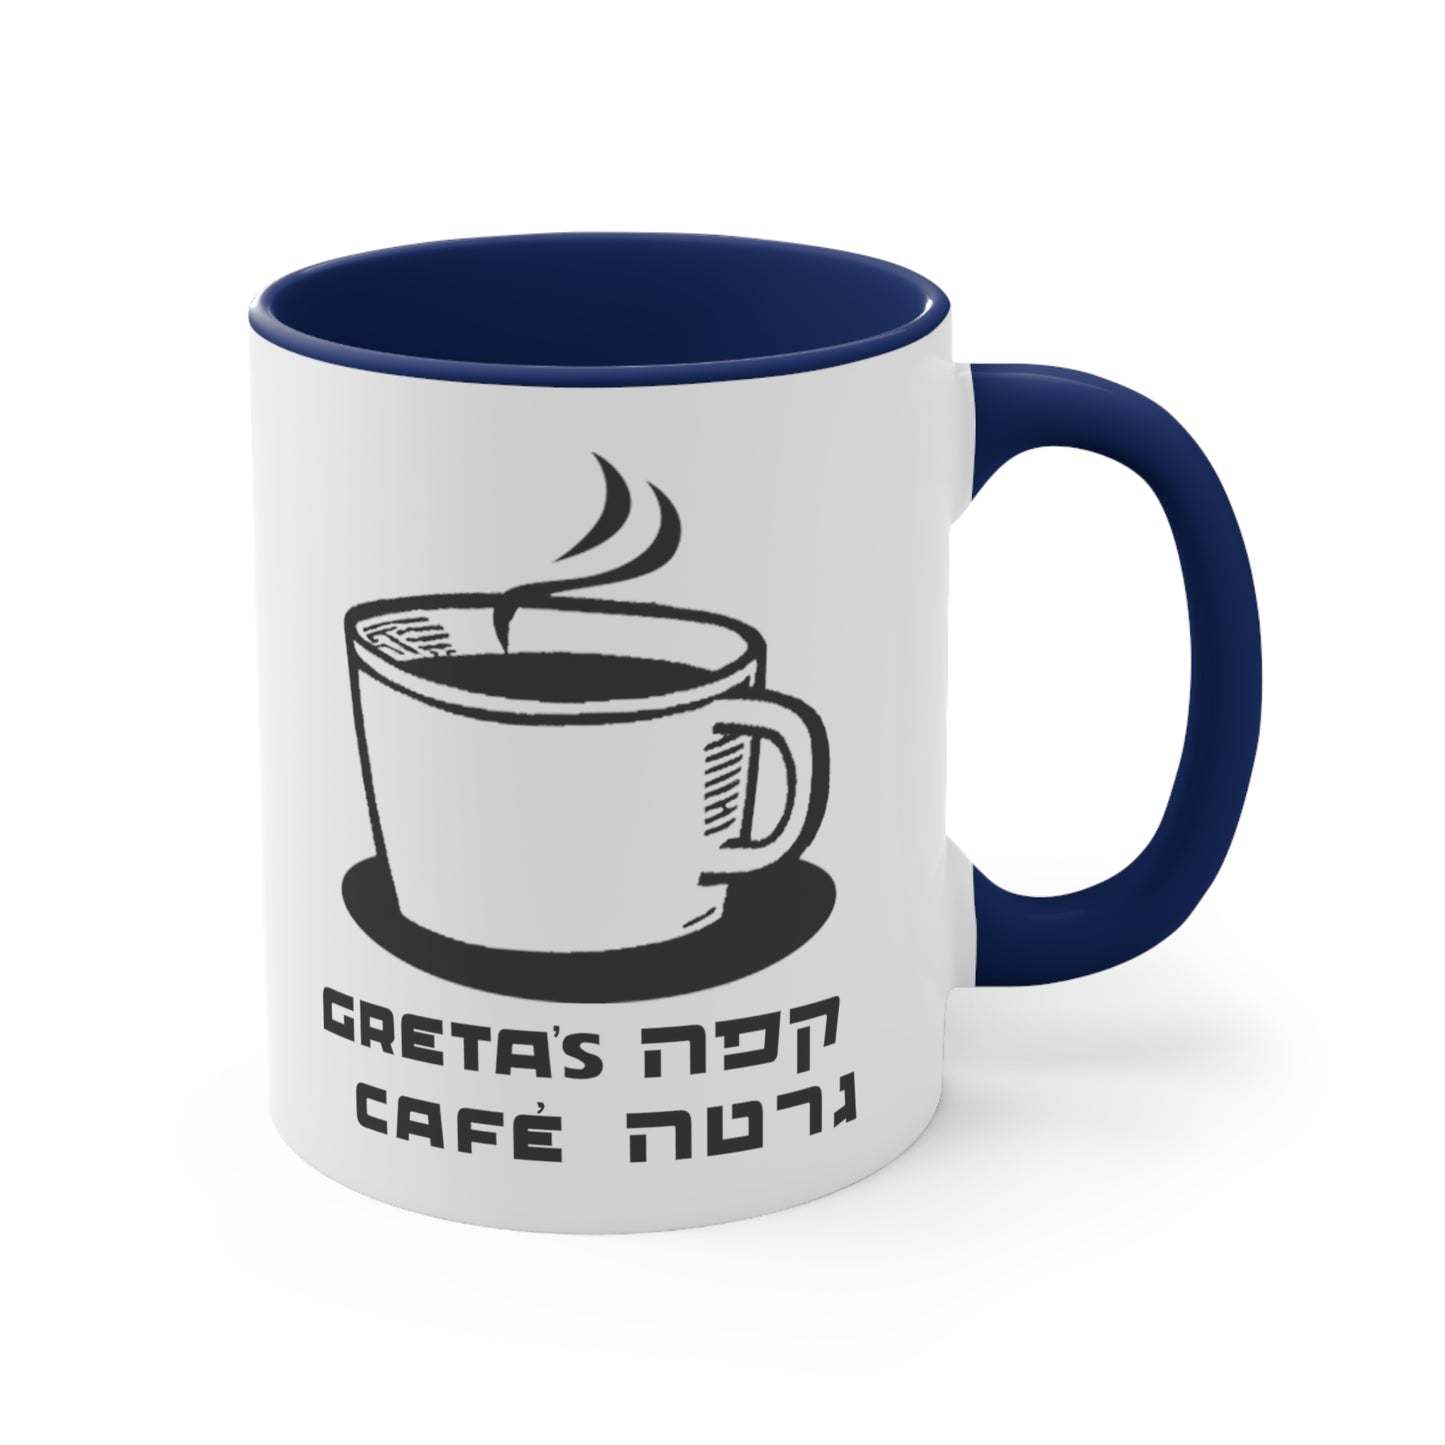 Greta's Cafe Accented Mug - Navy